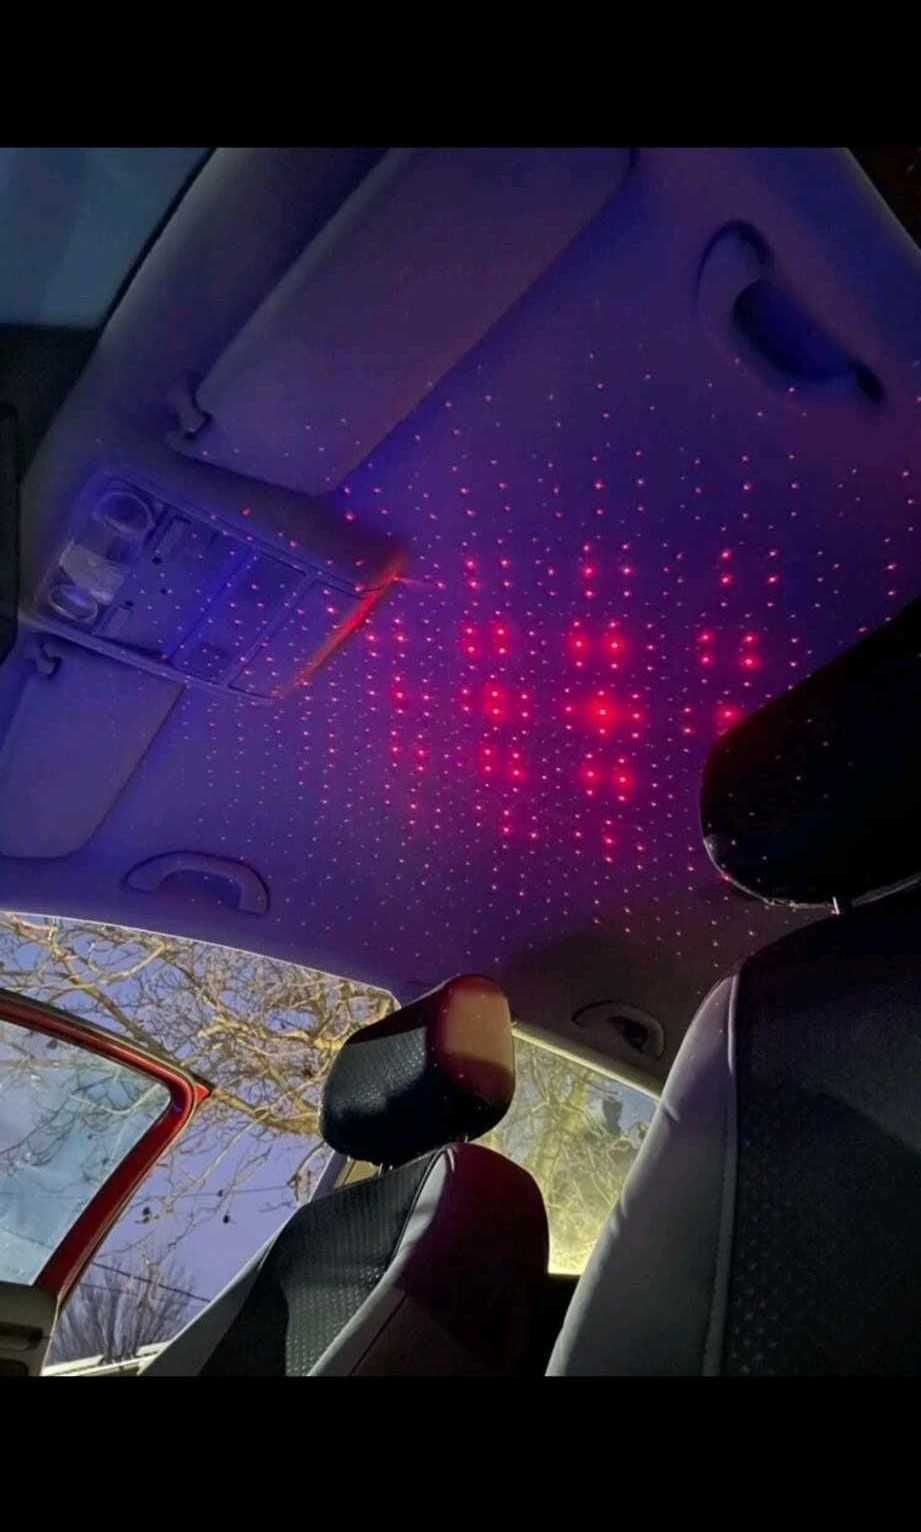 Lampa LED USB cu proiectie lumina rosie pe plafon auto